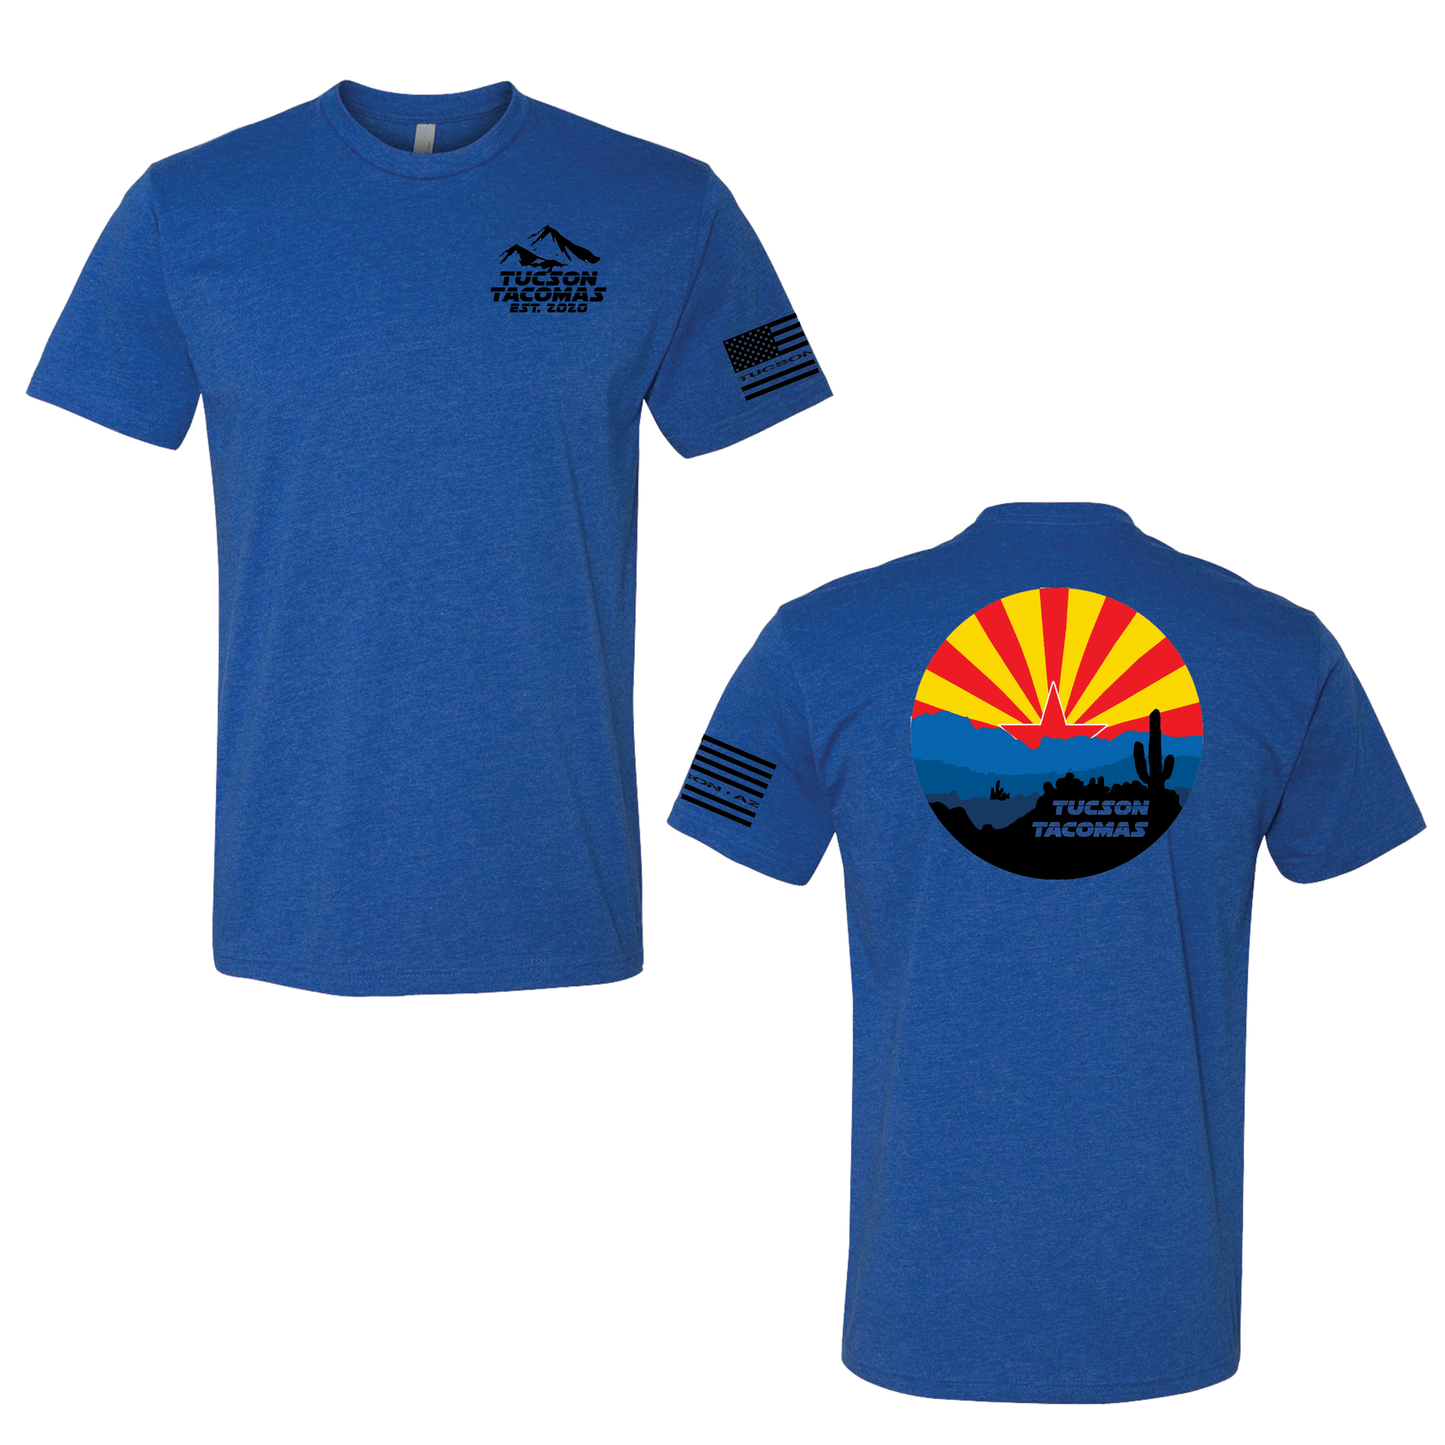 Tucson Tacomas Shirt - Premium  from American Patriot Revival - Just $22.49! Shop now at American Patriot RevivalTucson Tacomas Shirt